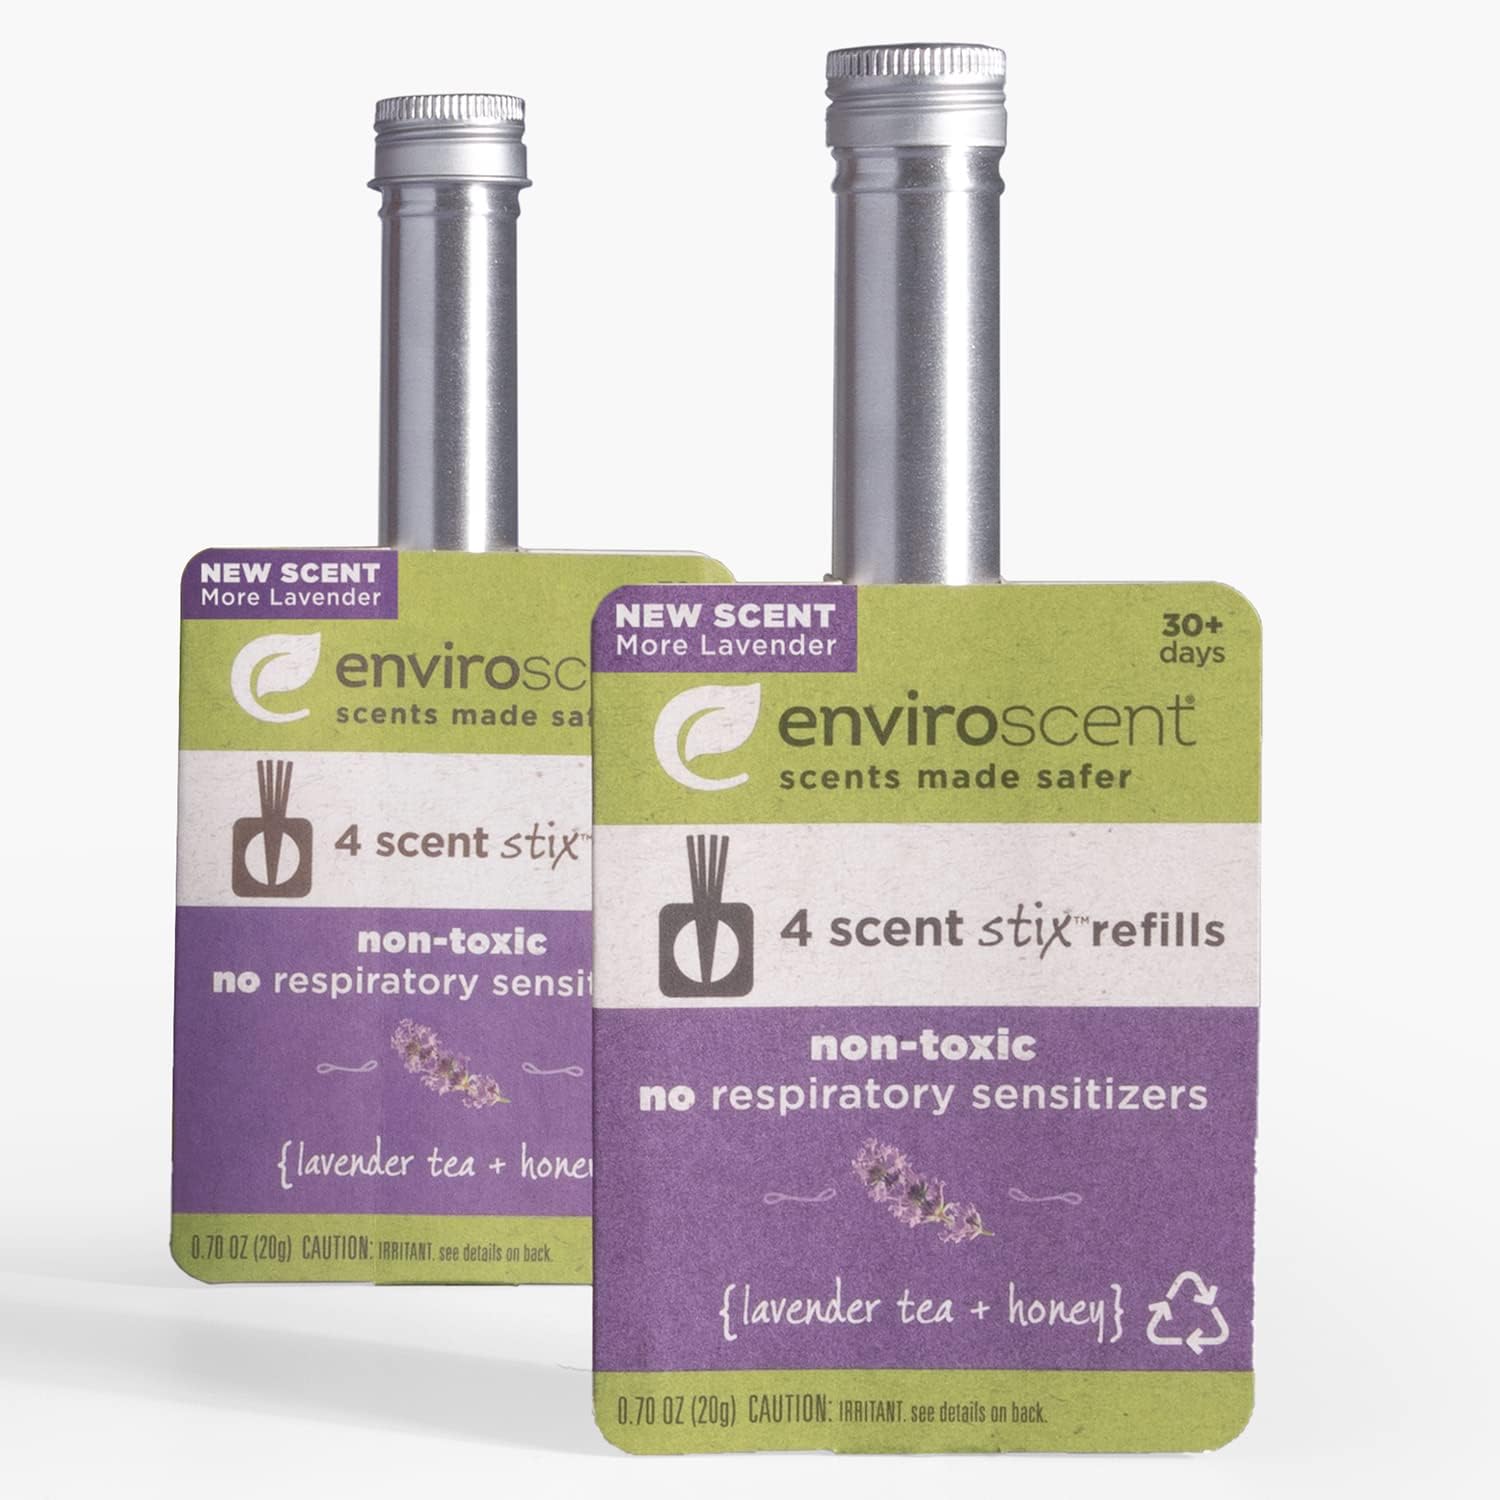 Enviroscent Non-Toxic Air Freshener for Home (Lavender Tea & Honey) Essential Oil Diffuser | Air Freshener & Room Freshener | Home Fragrance Last Over 30 Days | 8 Scent Stix Refills